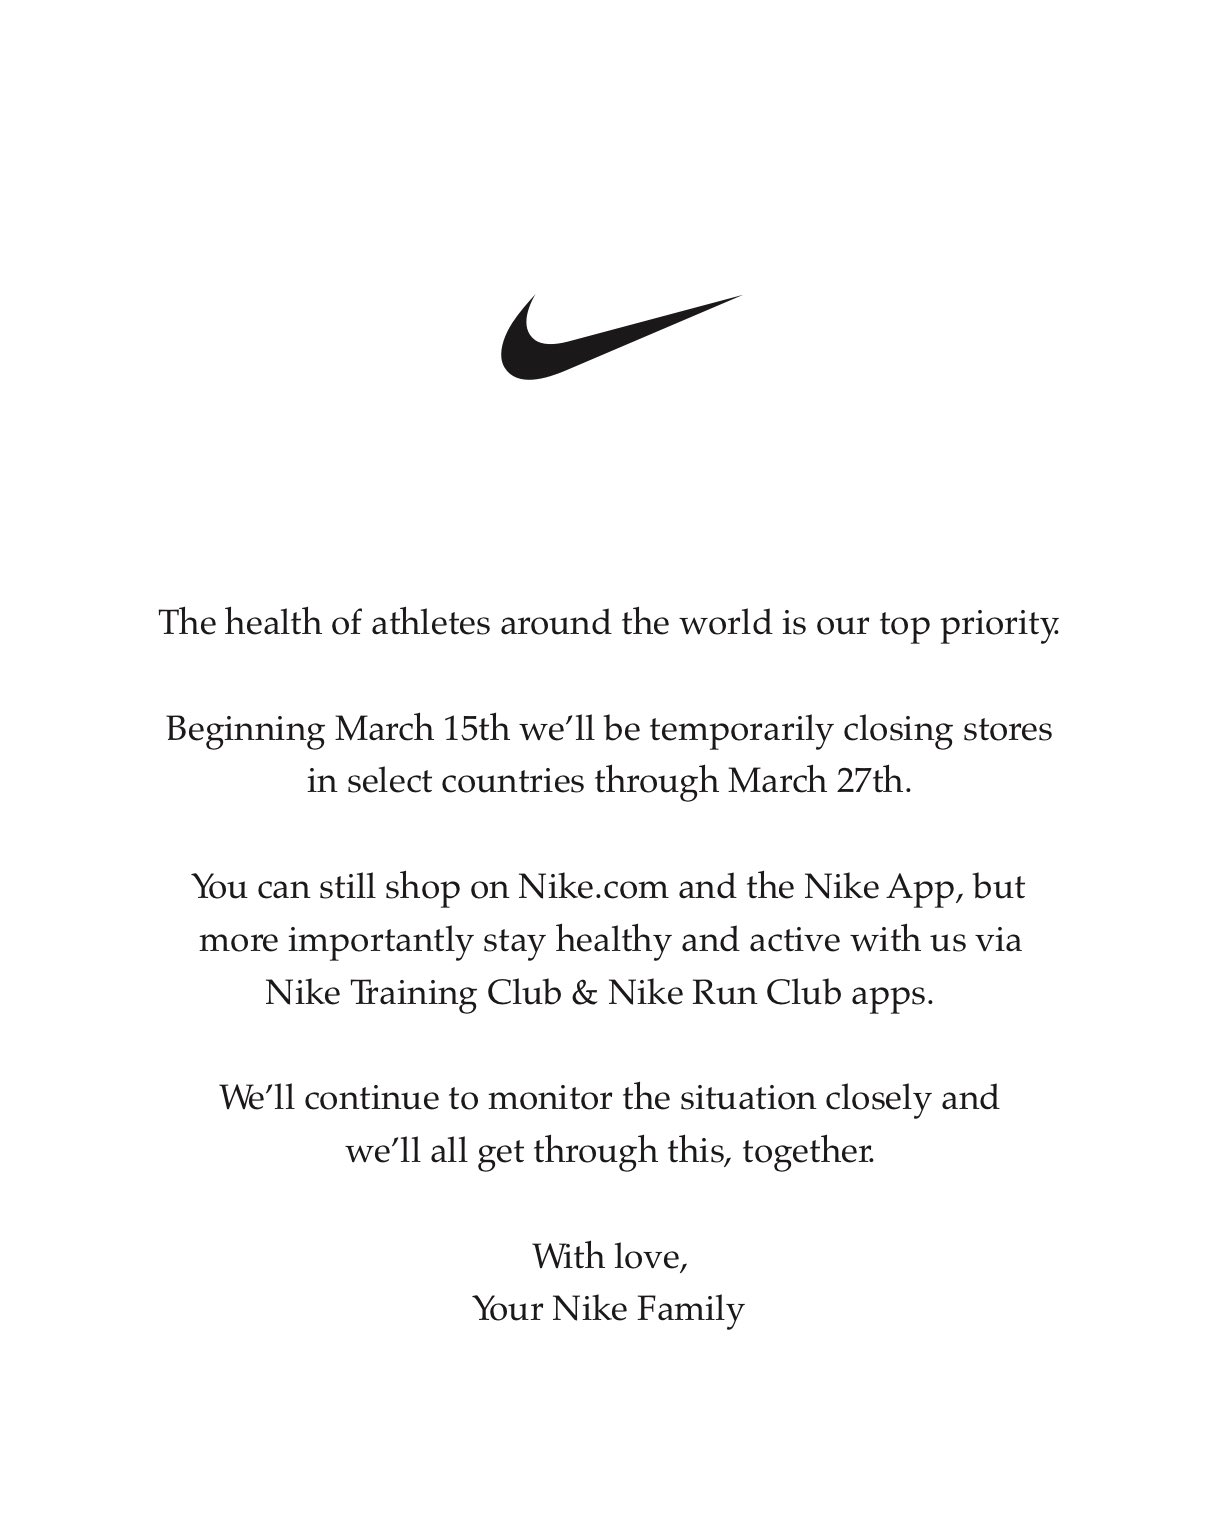 Nike N7 (@NikeN7) / Twitter